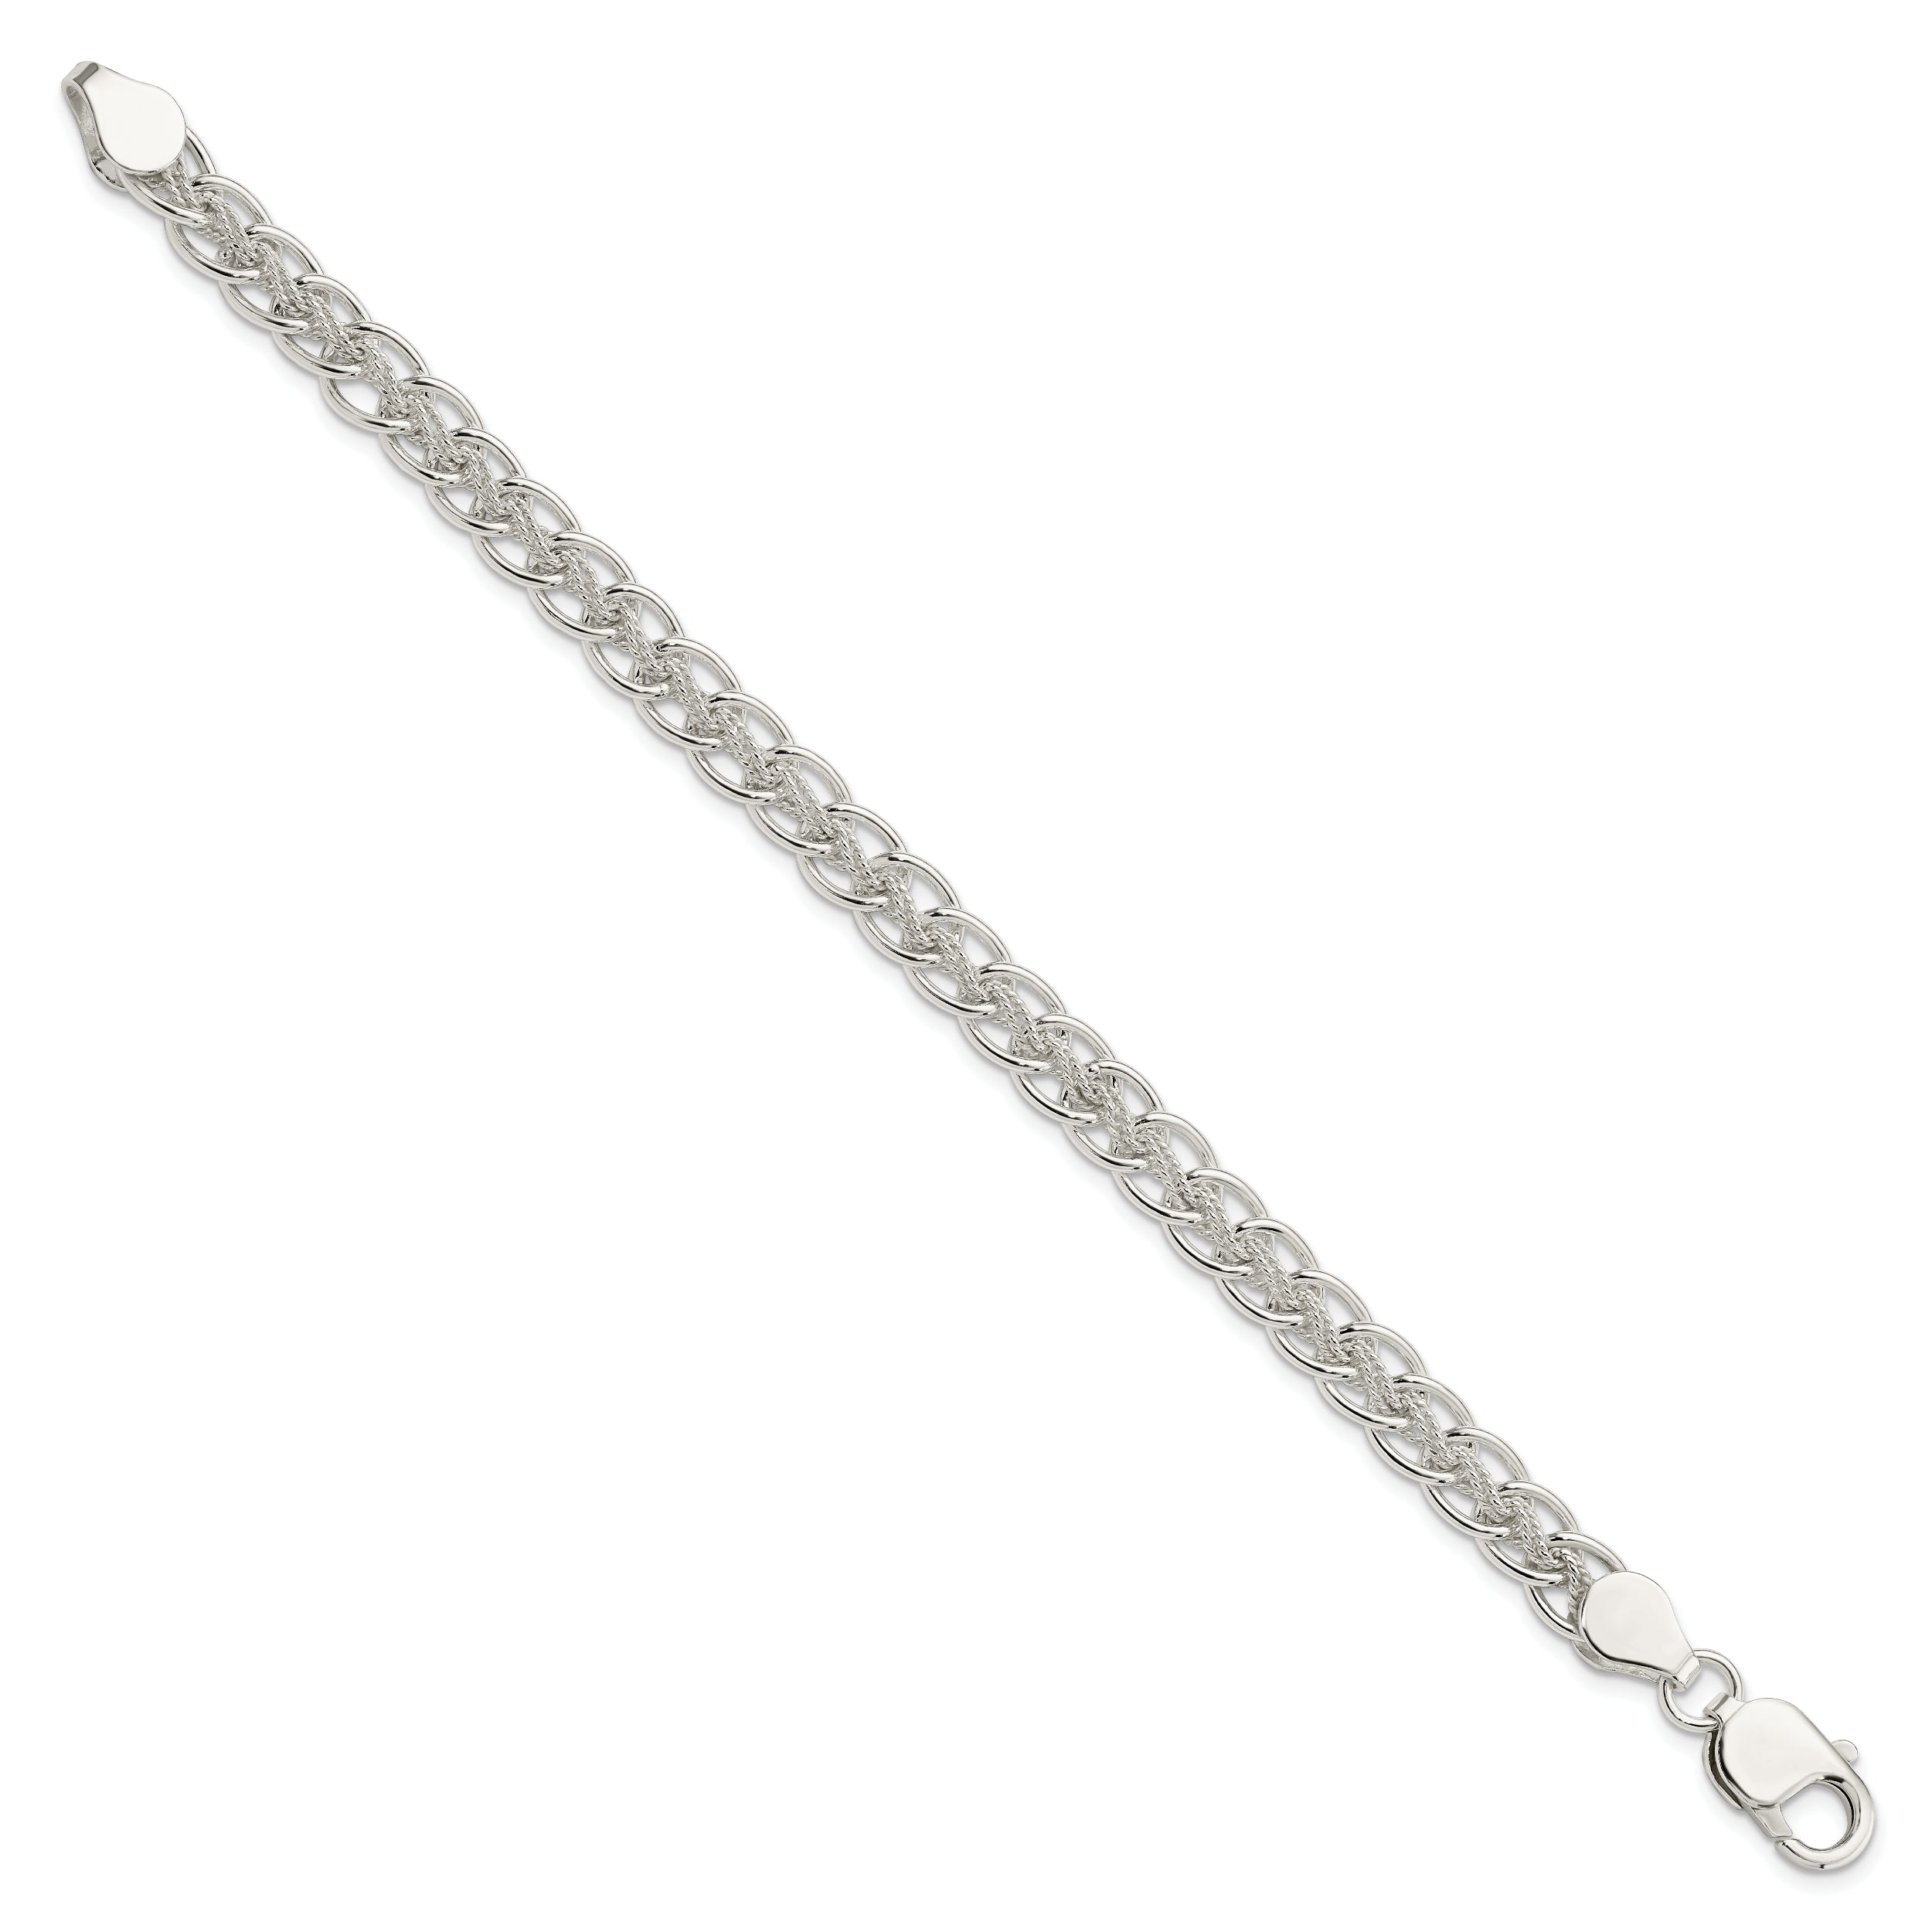 Sterling Silver Polished and Textured Fancy Bracelet